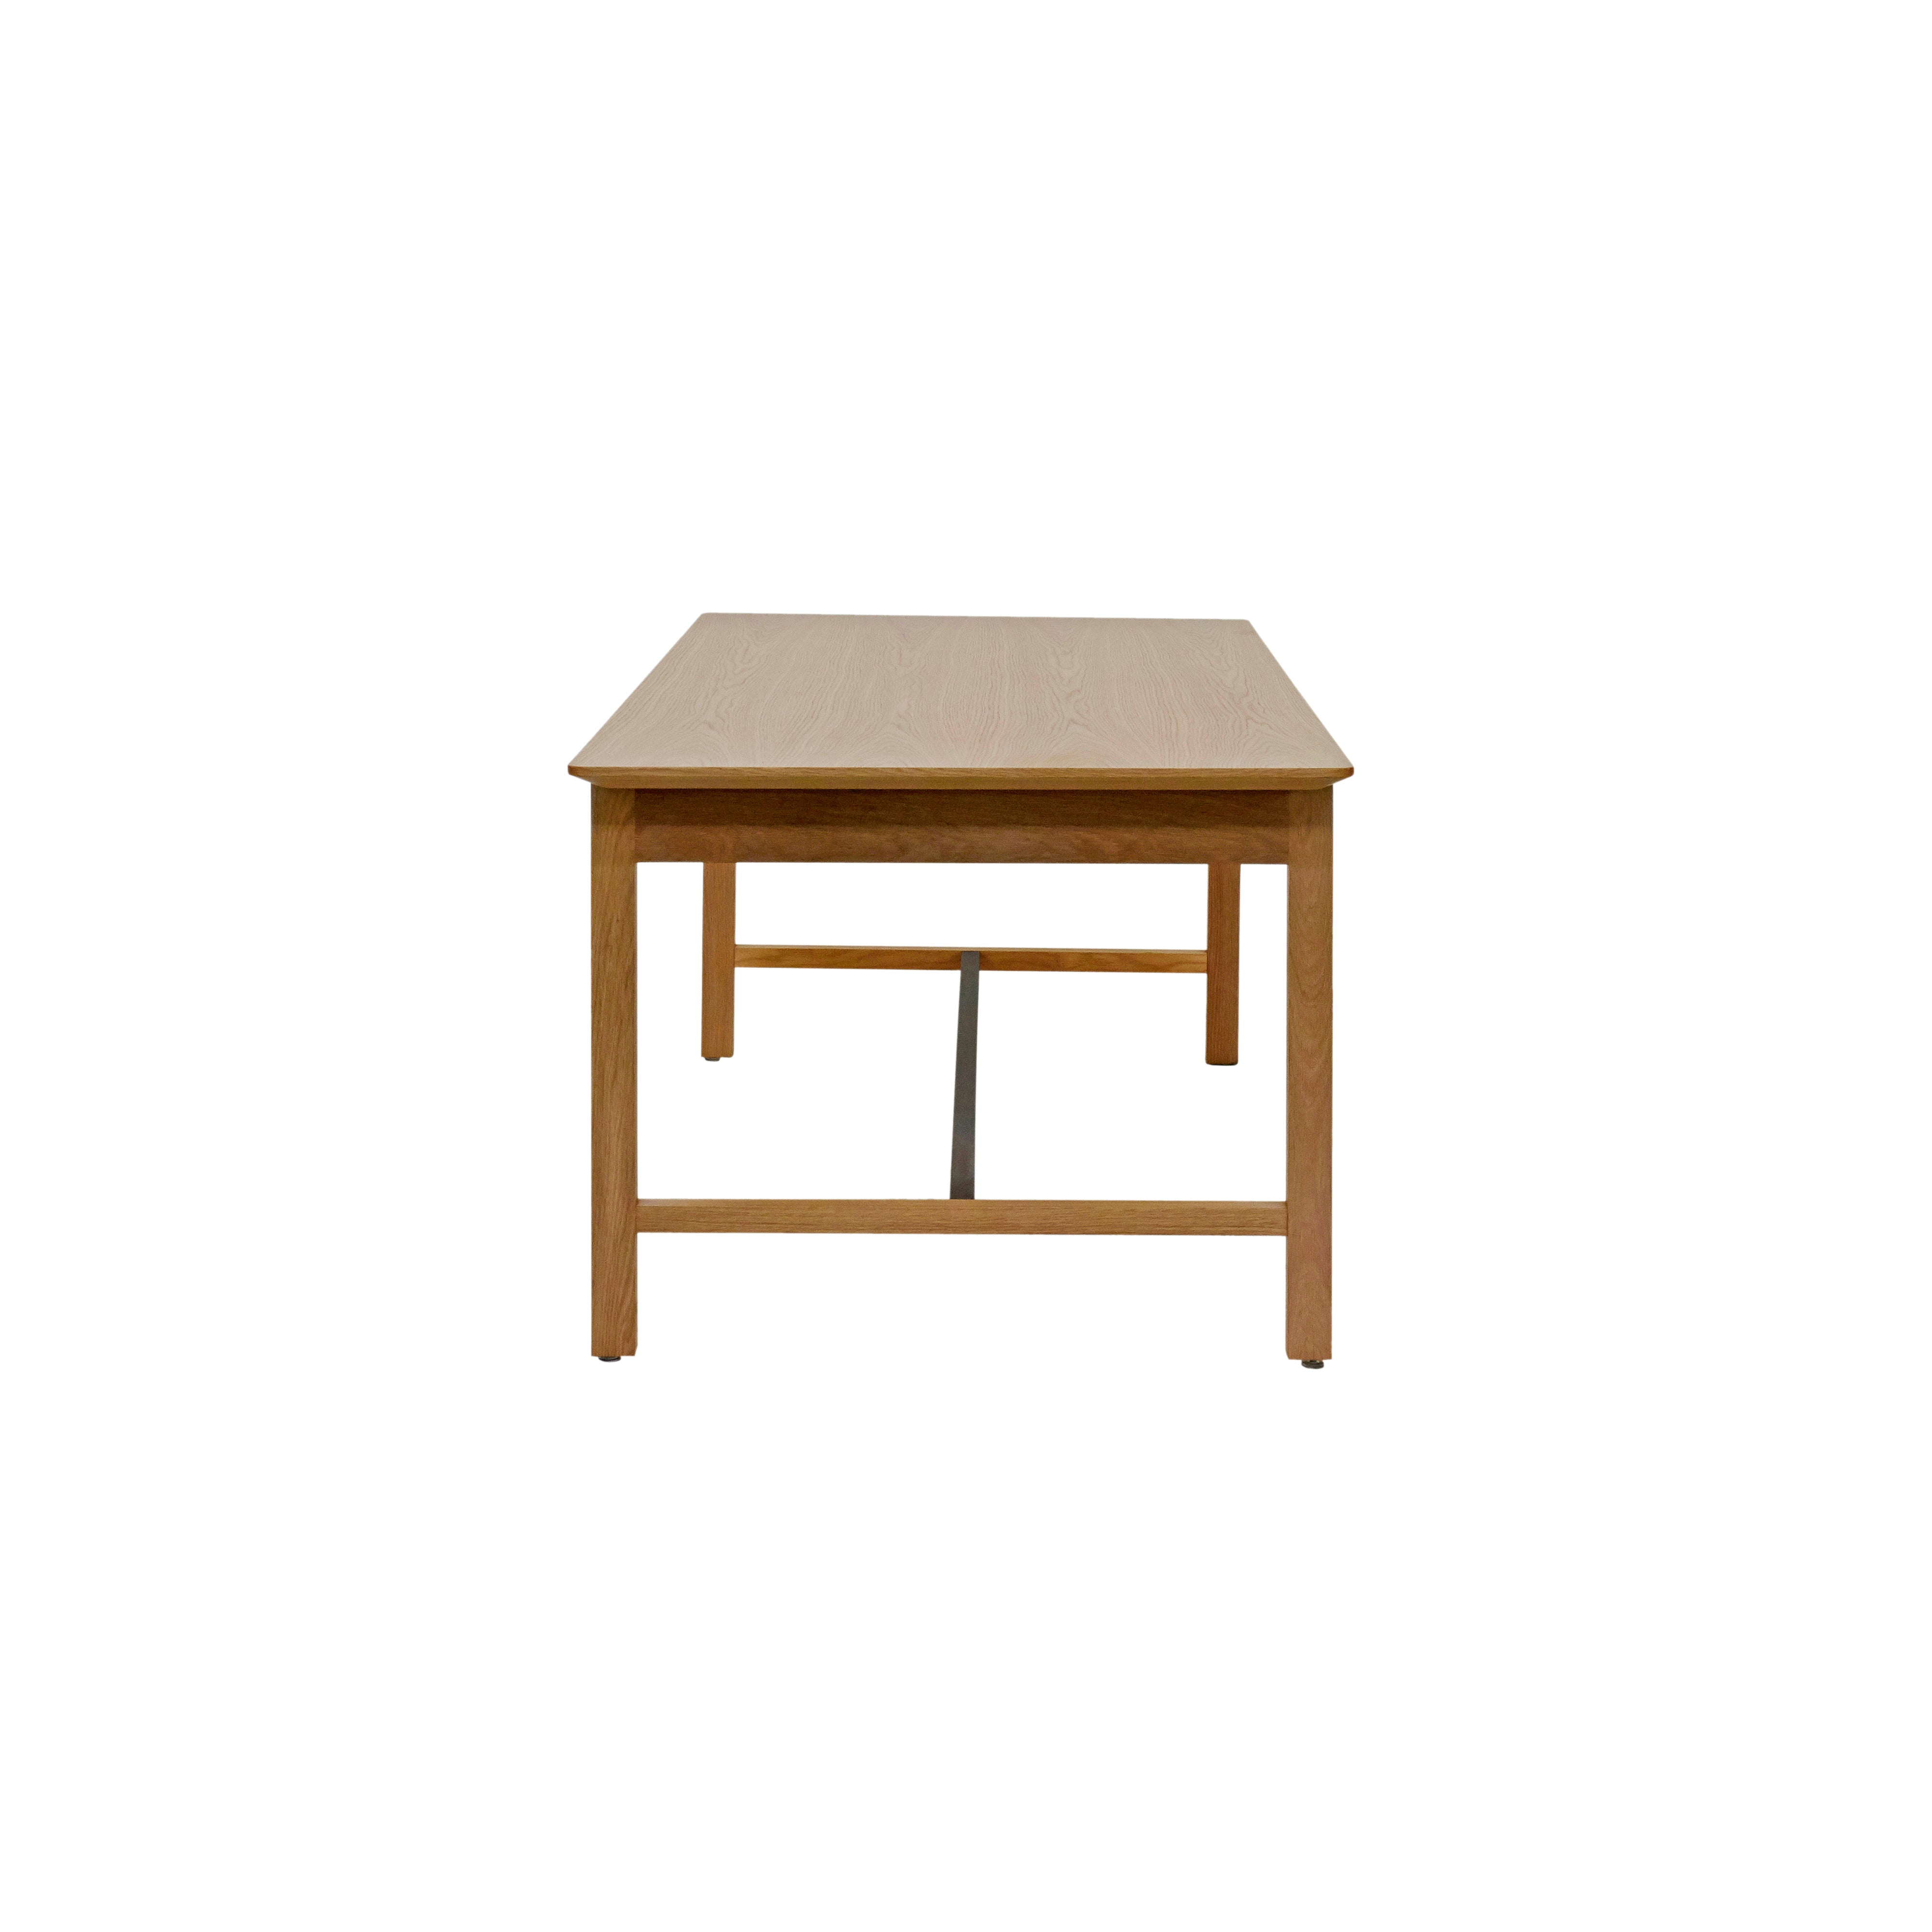 Aya Dining Table: Small - 70.9